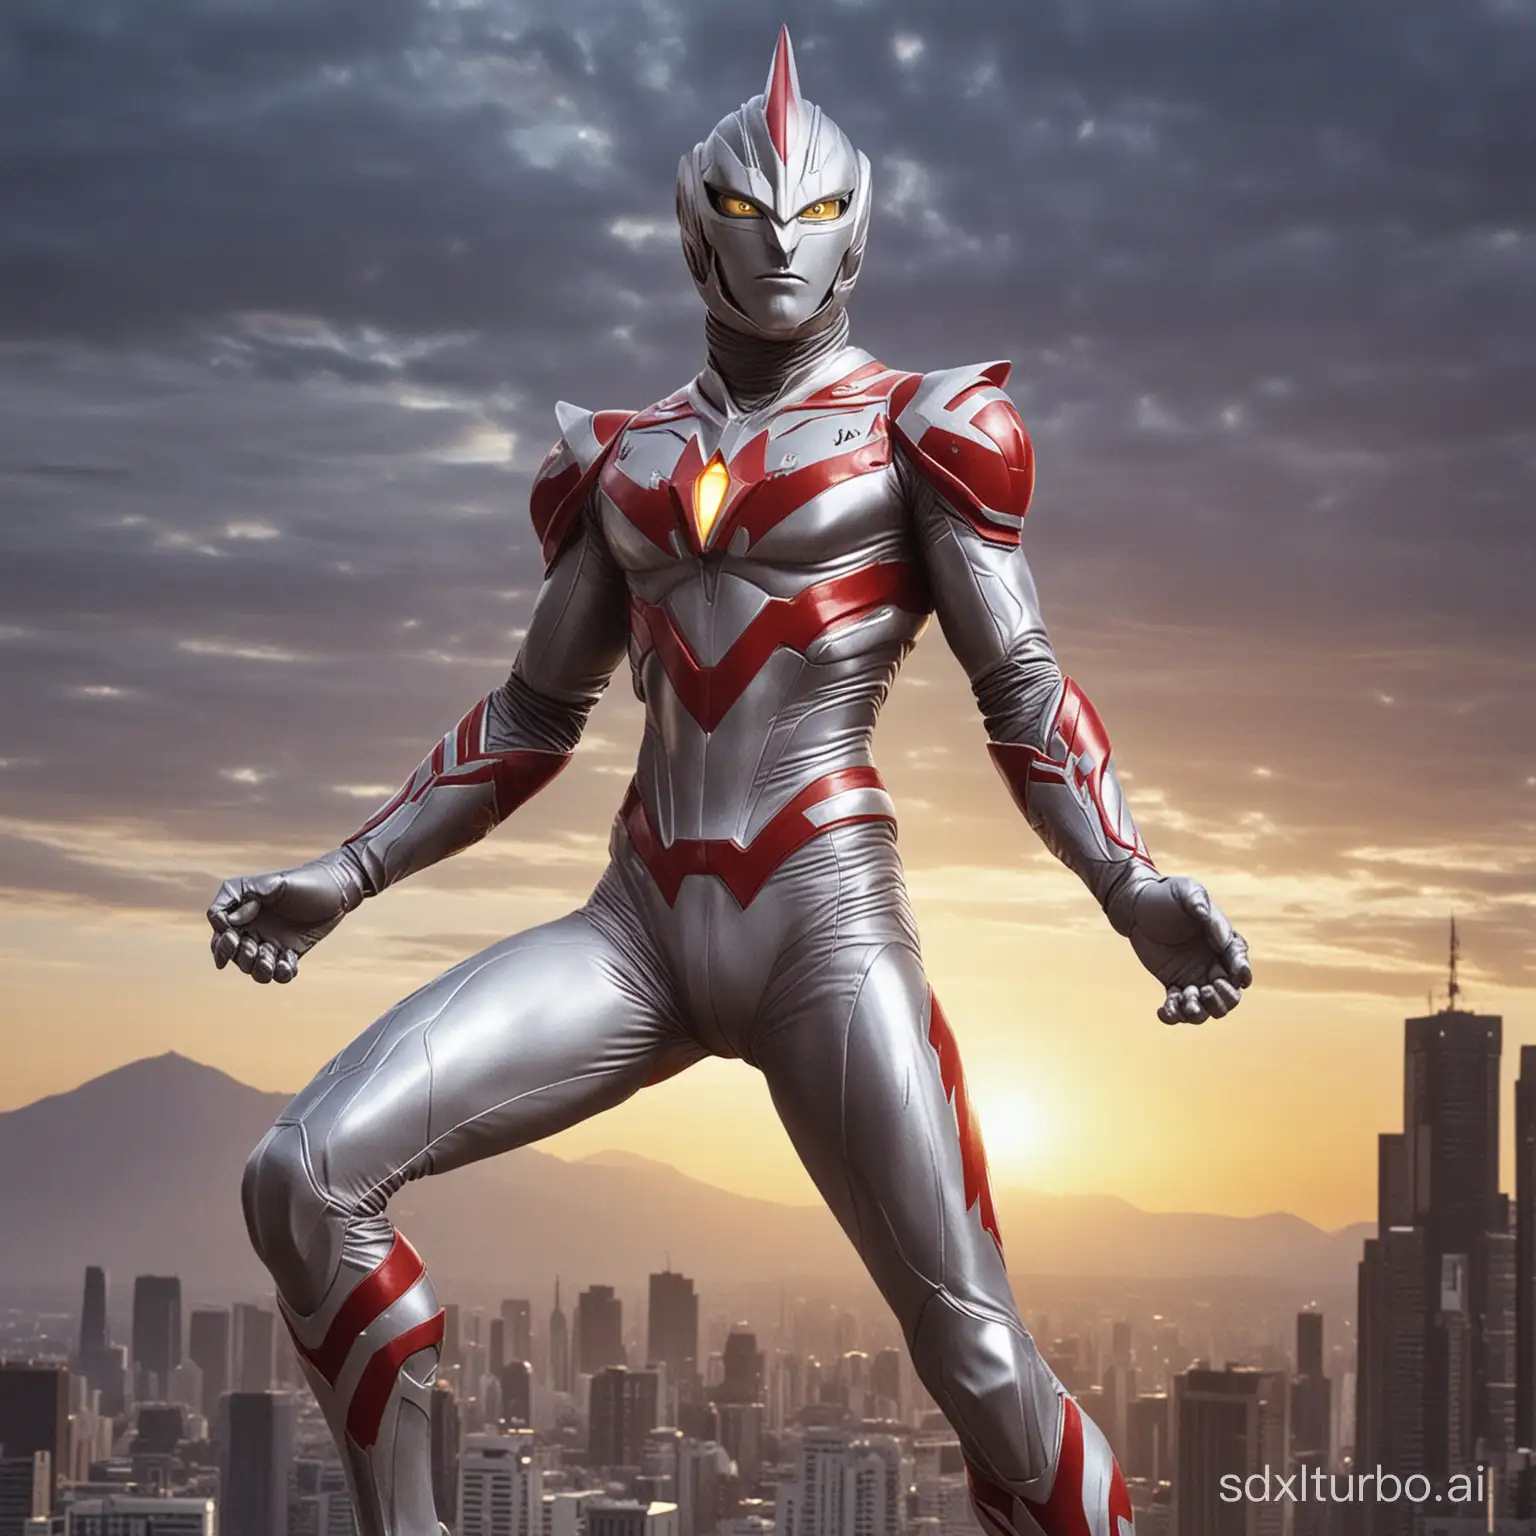 Ultraman-Tiga-in-Dynamic-Action-Pose-Fighting-Gigantic-Monster